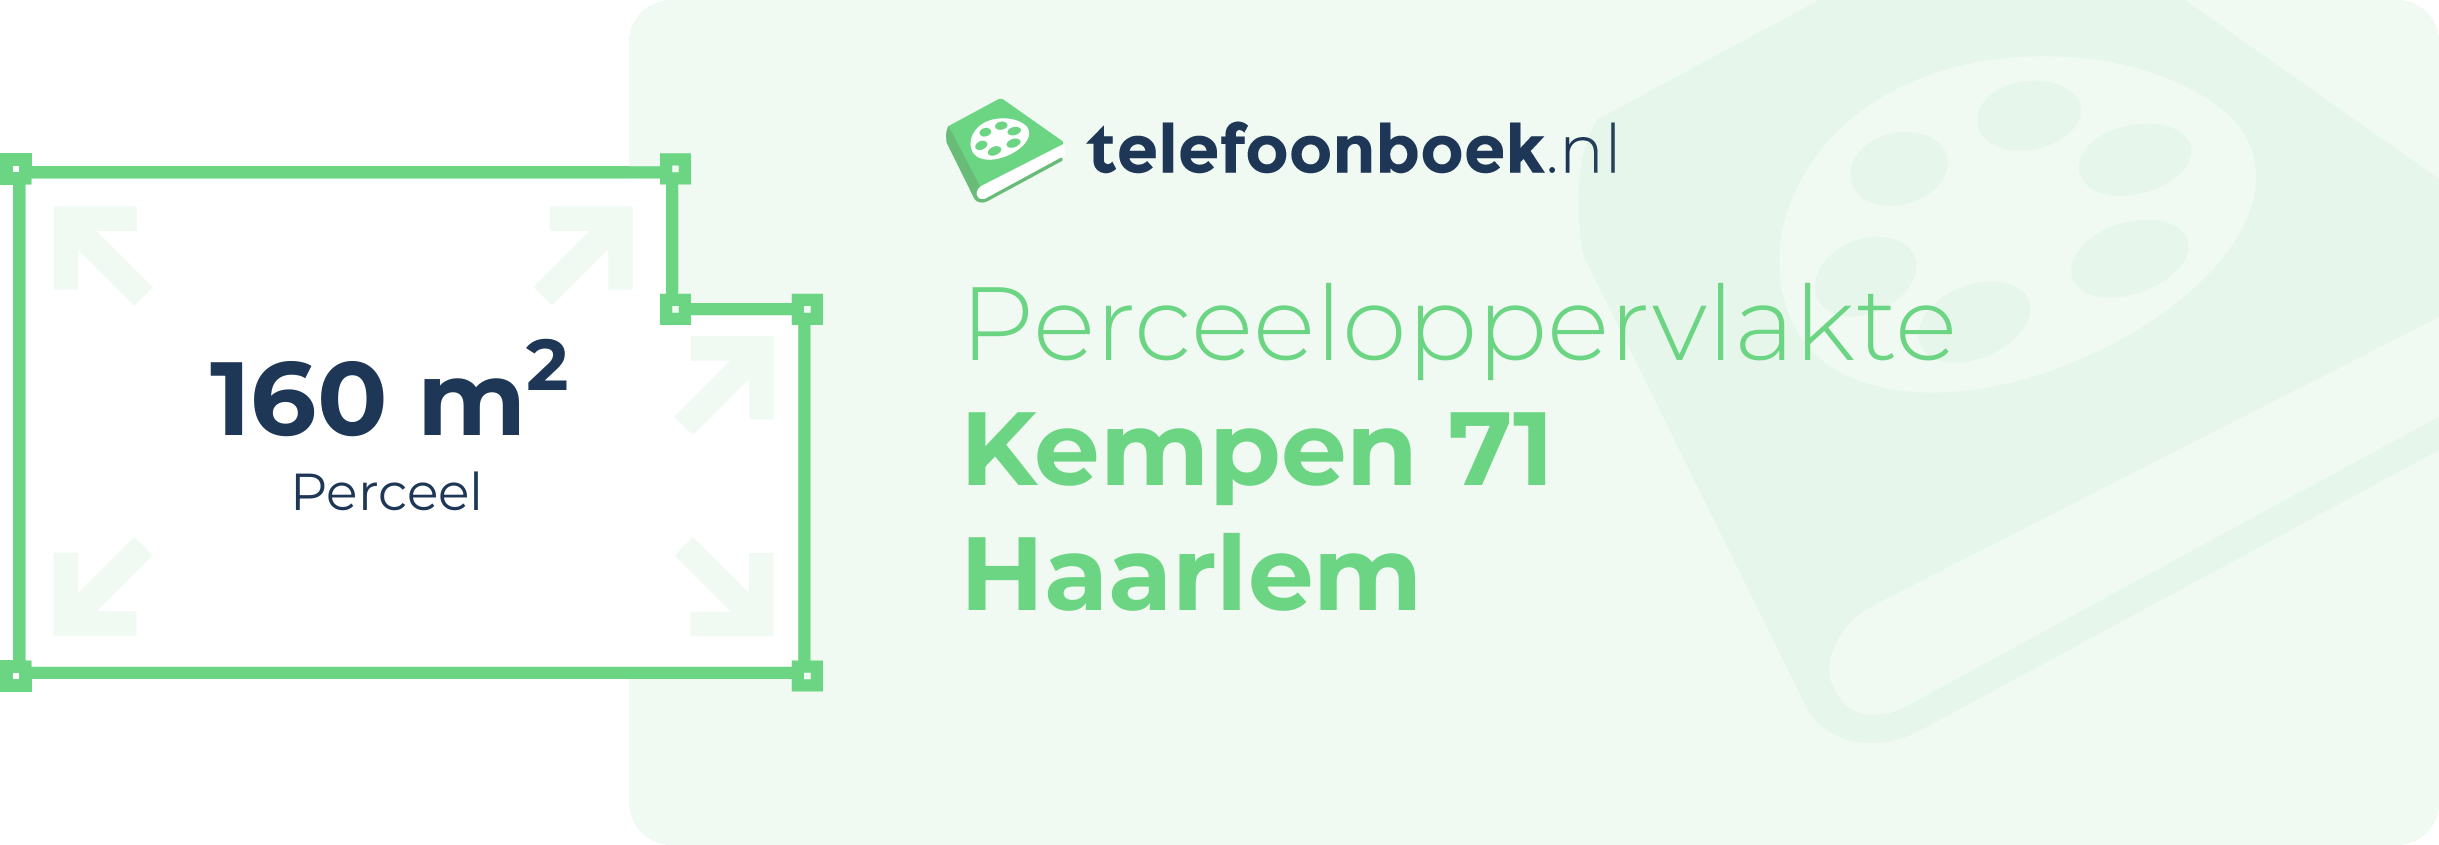 Perceeloppervlakte Kempen 71 Haarlem